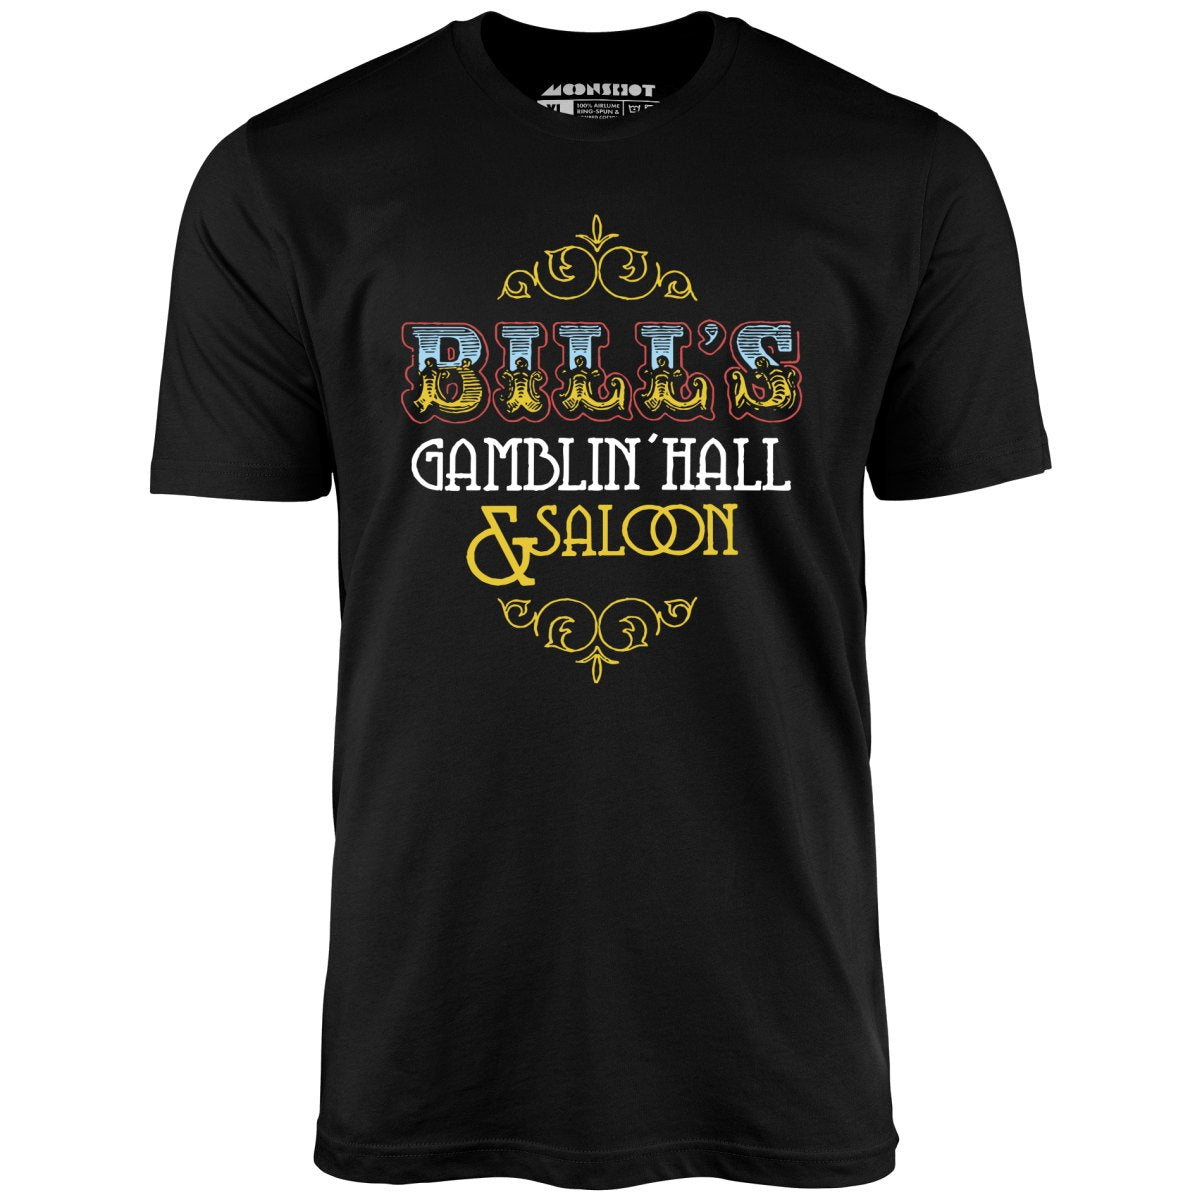 Bill's Gamblin' Hall & Saloon - Vintage Las Vegas - Unisex T-Shirt